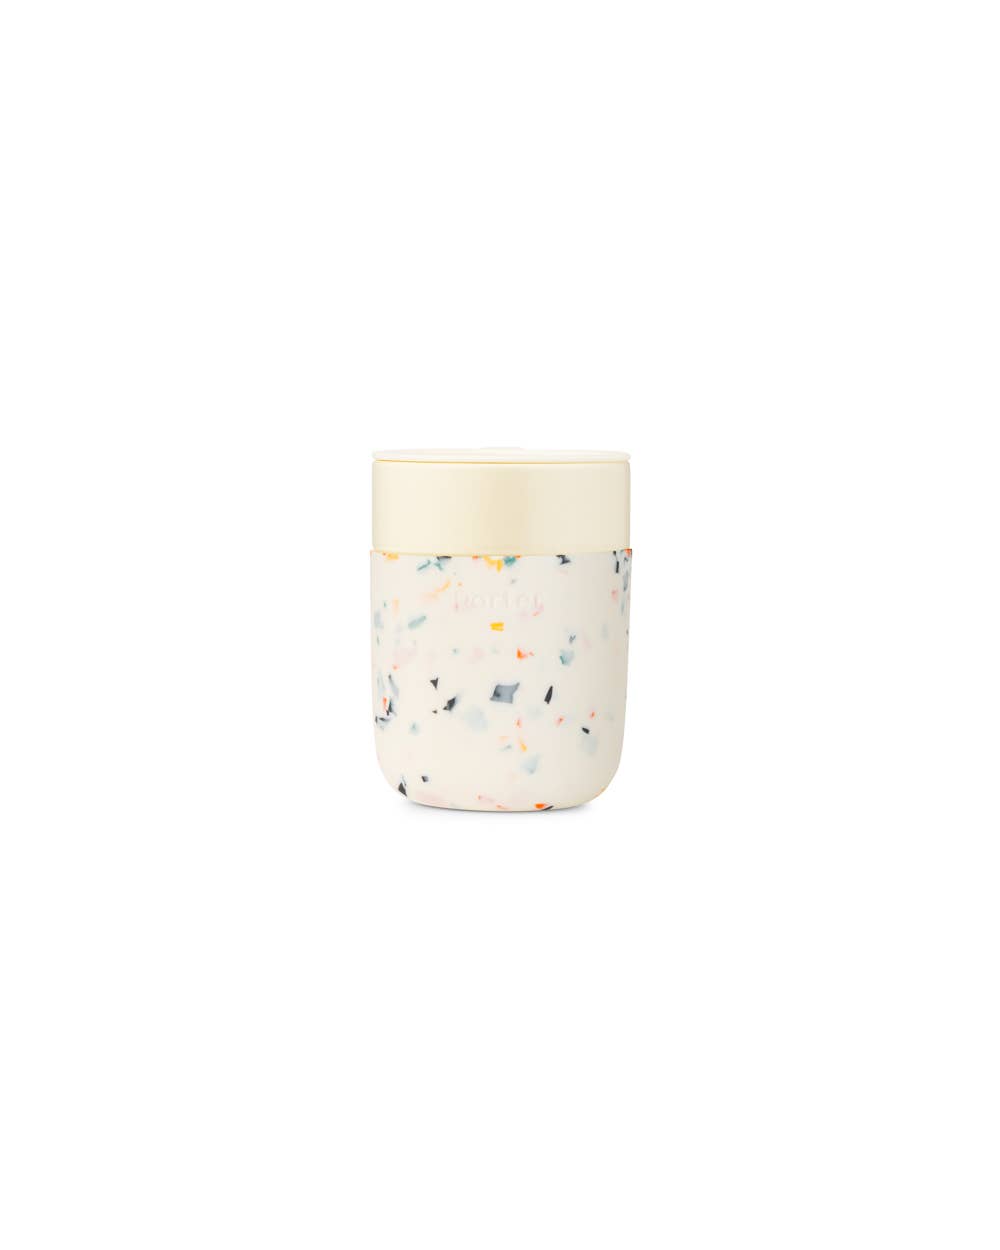 Porter Ceramic Reusable Coffee Mug 12oz - Terrazzo  W&P cream  -better made easy-eco-friendly-sustainable-gifting